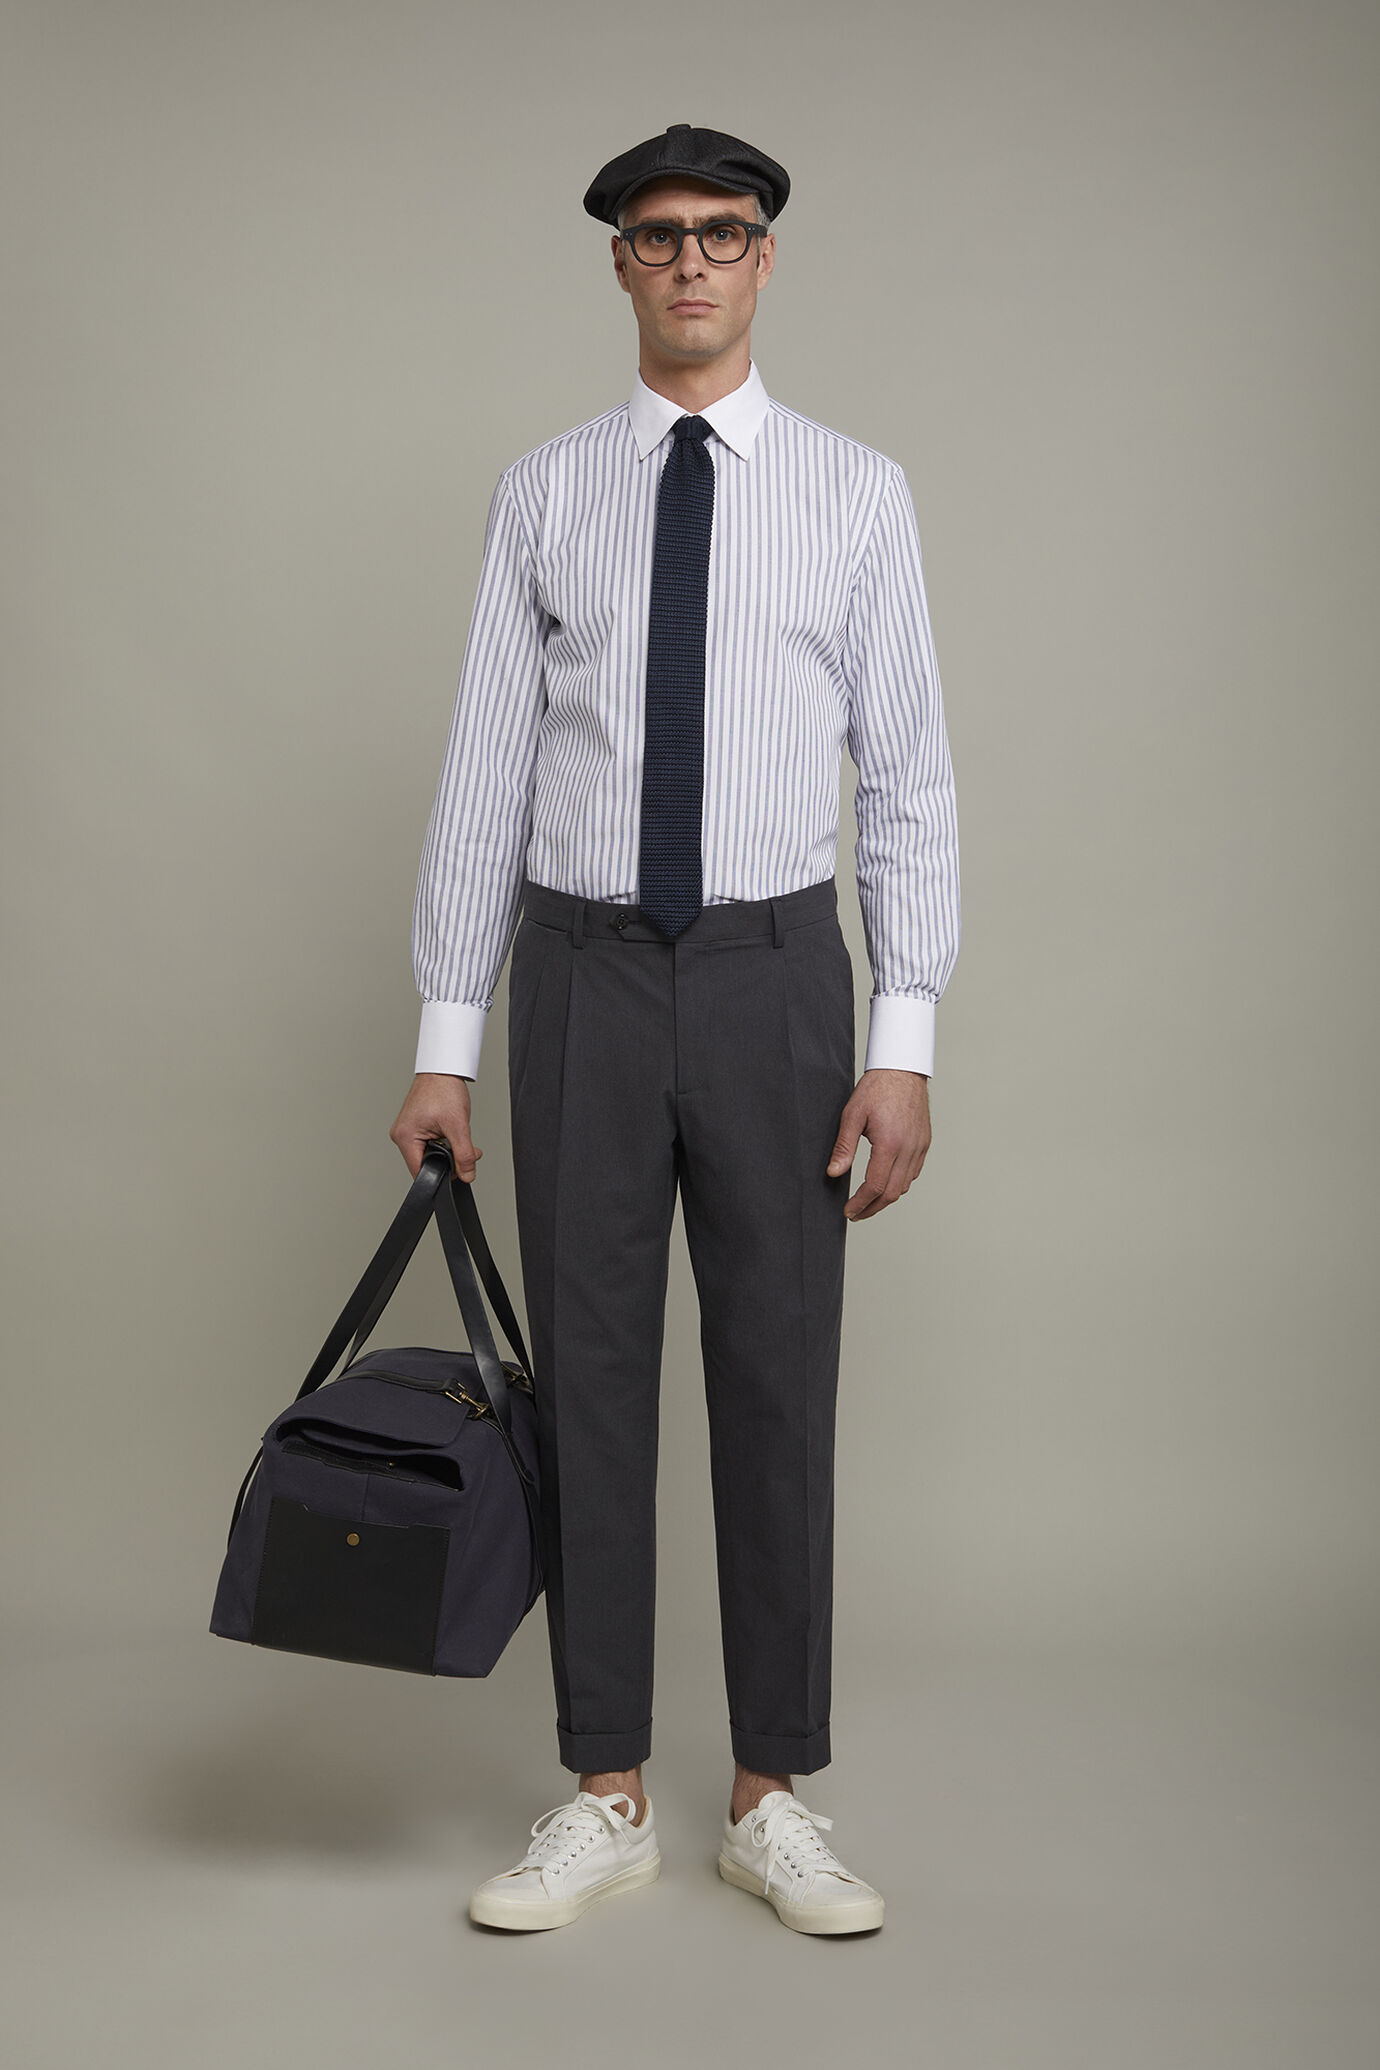 Men's shirt classic collar 100% cotton yarn-dyed fabric wide stripe regular fit